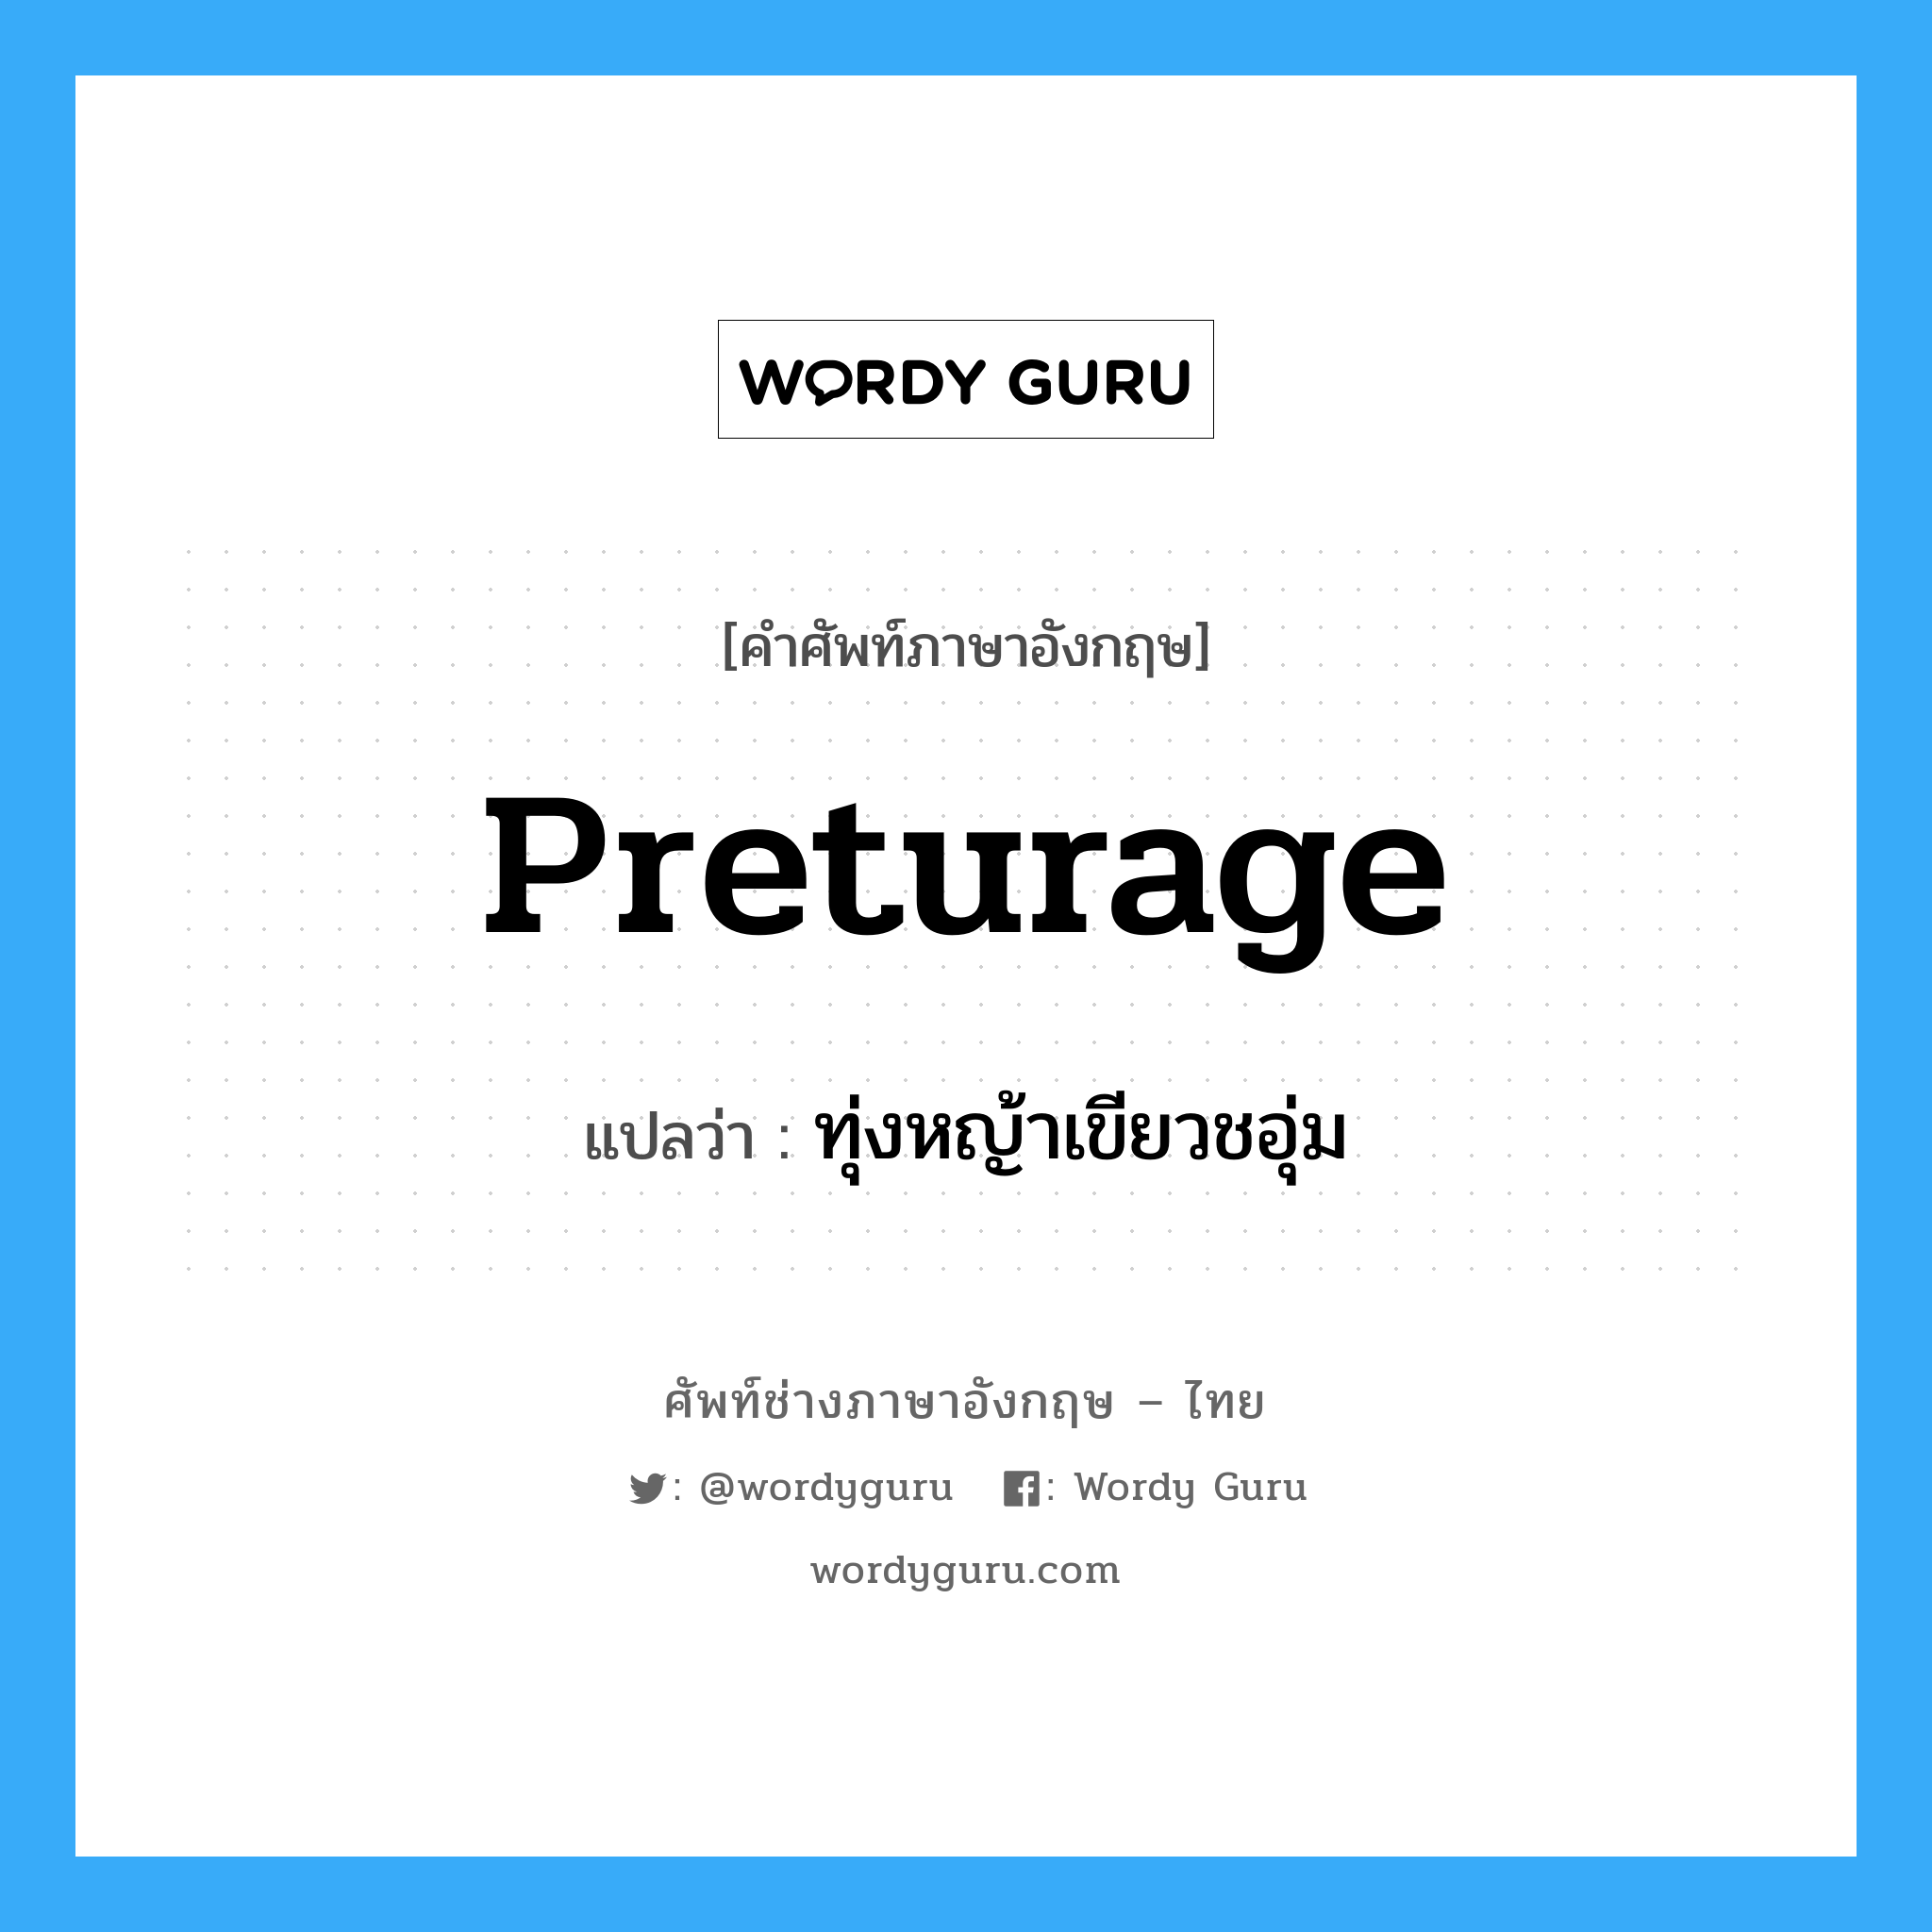 preturage แปลว่า?, คำศัพท์ช่างภาษาอังกฤษ - ไทย preturage คำศัพท์ภาษาอังกฤษ preturage แปลว่า ทุ่งหญ้าเขียวชอุ่ม